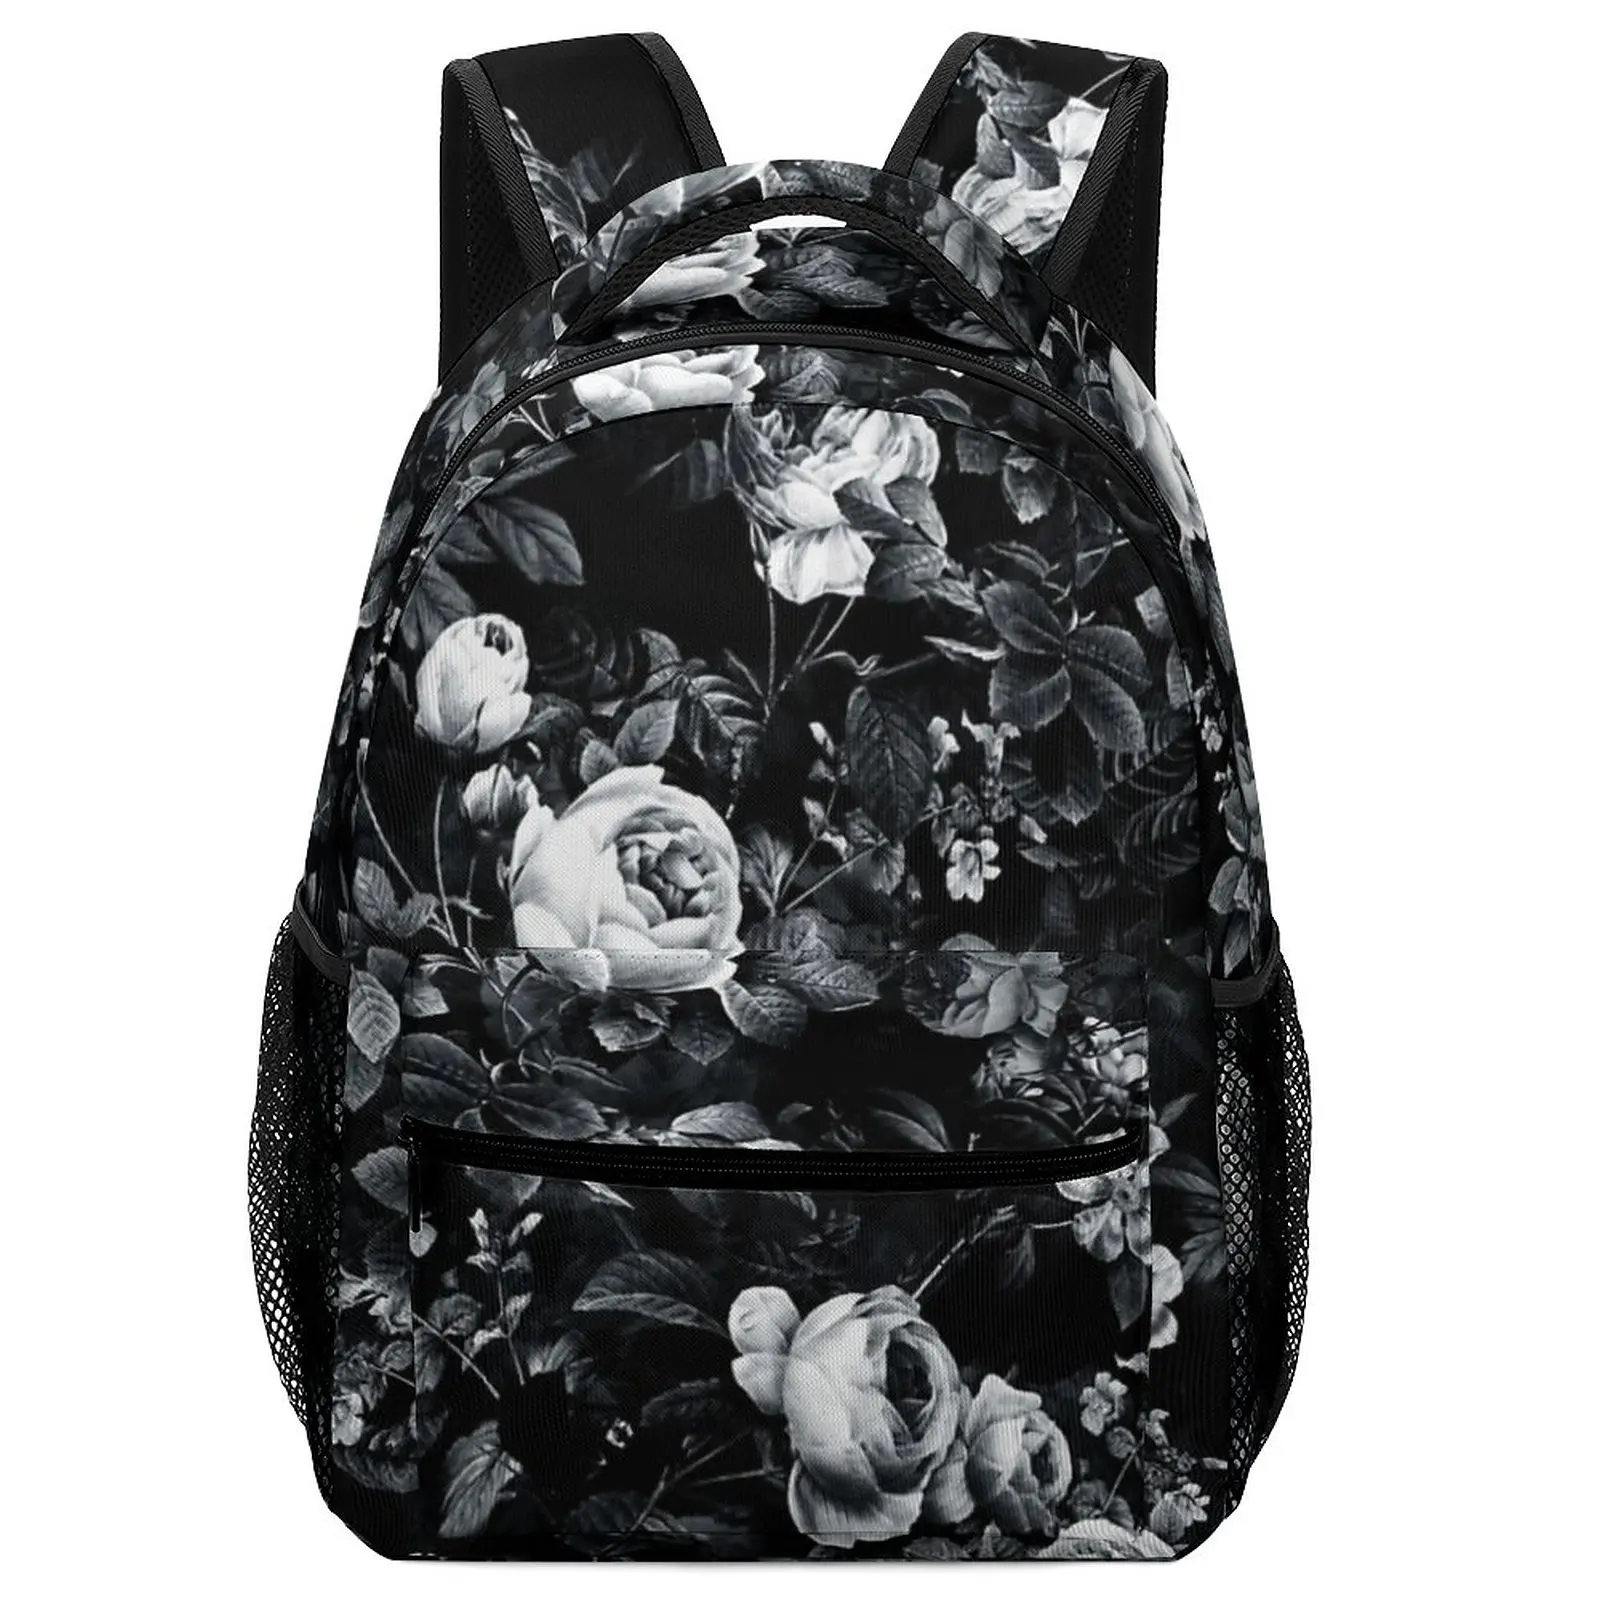 Roses Black And White Children Kids Art  Bag Teen School Bag School Backpack 2in1